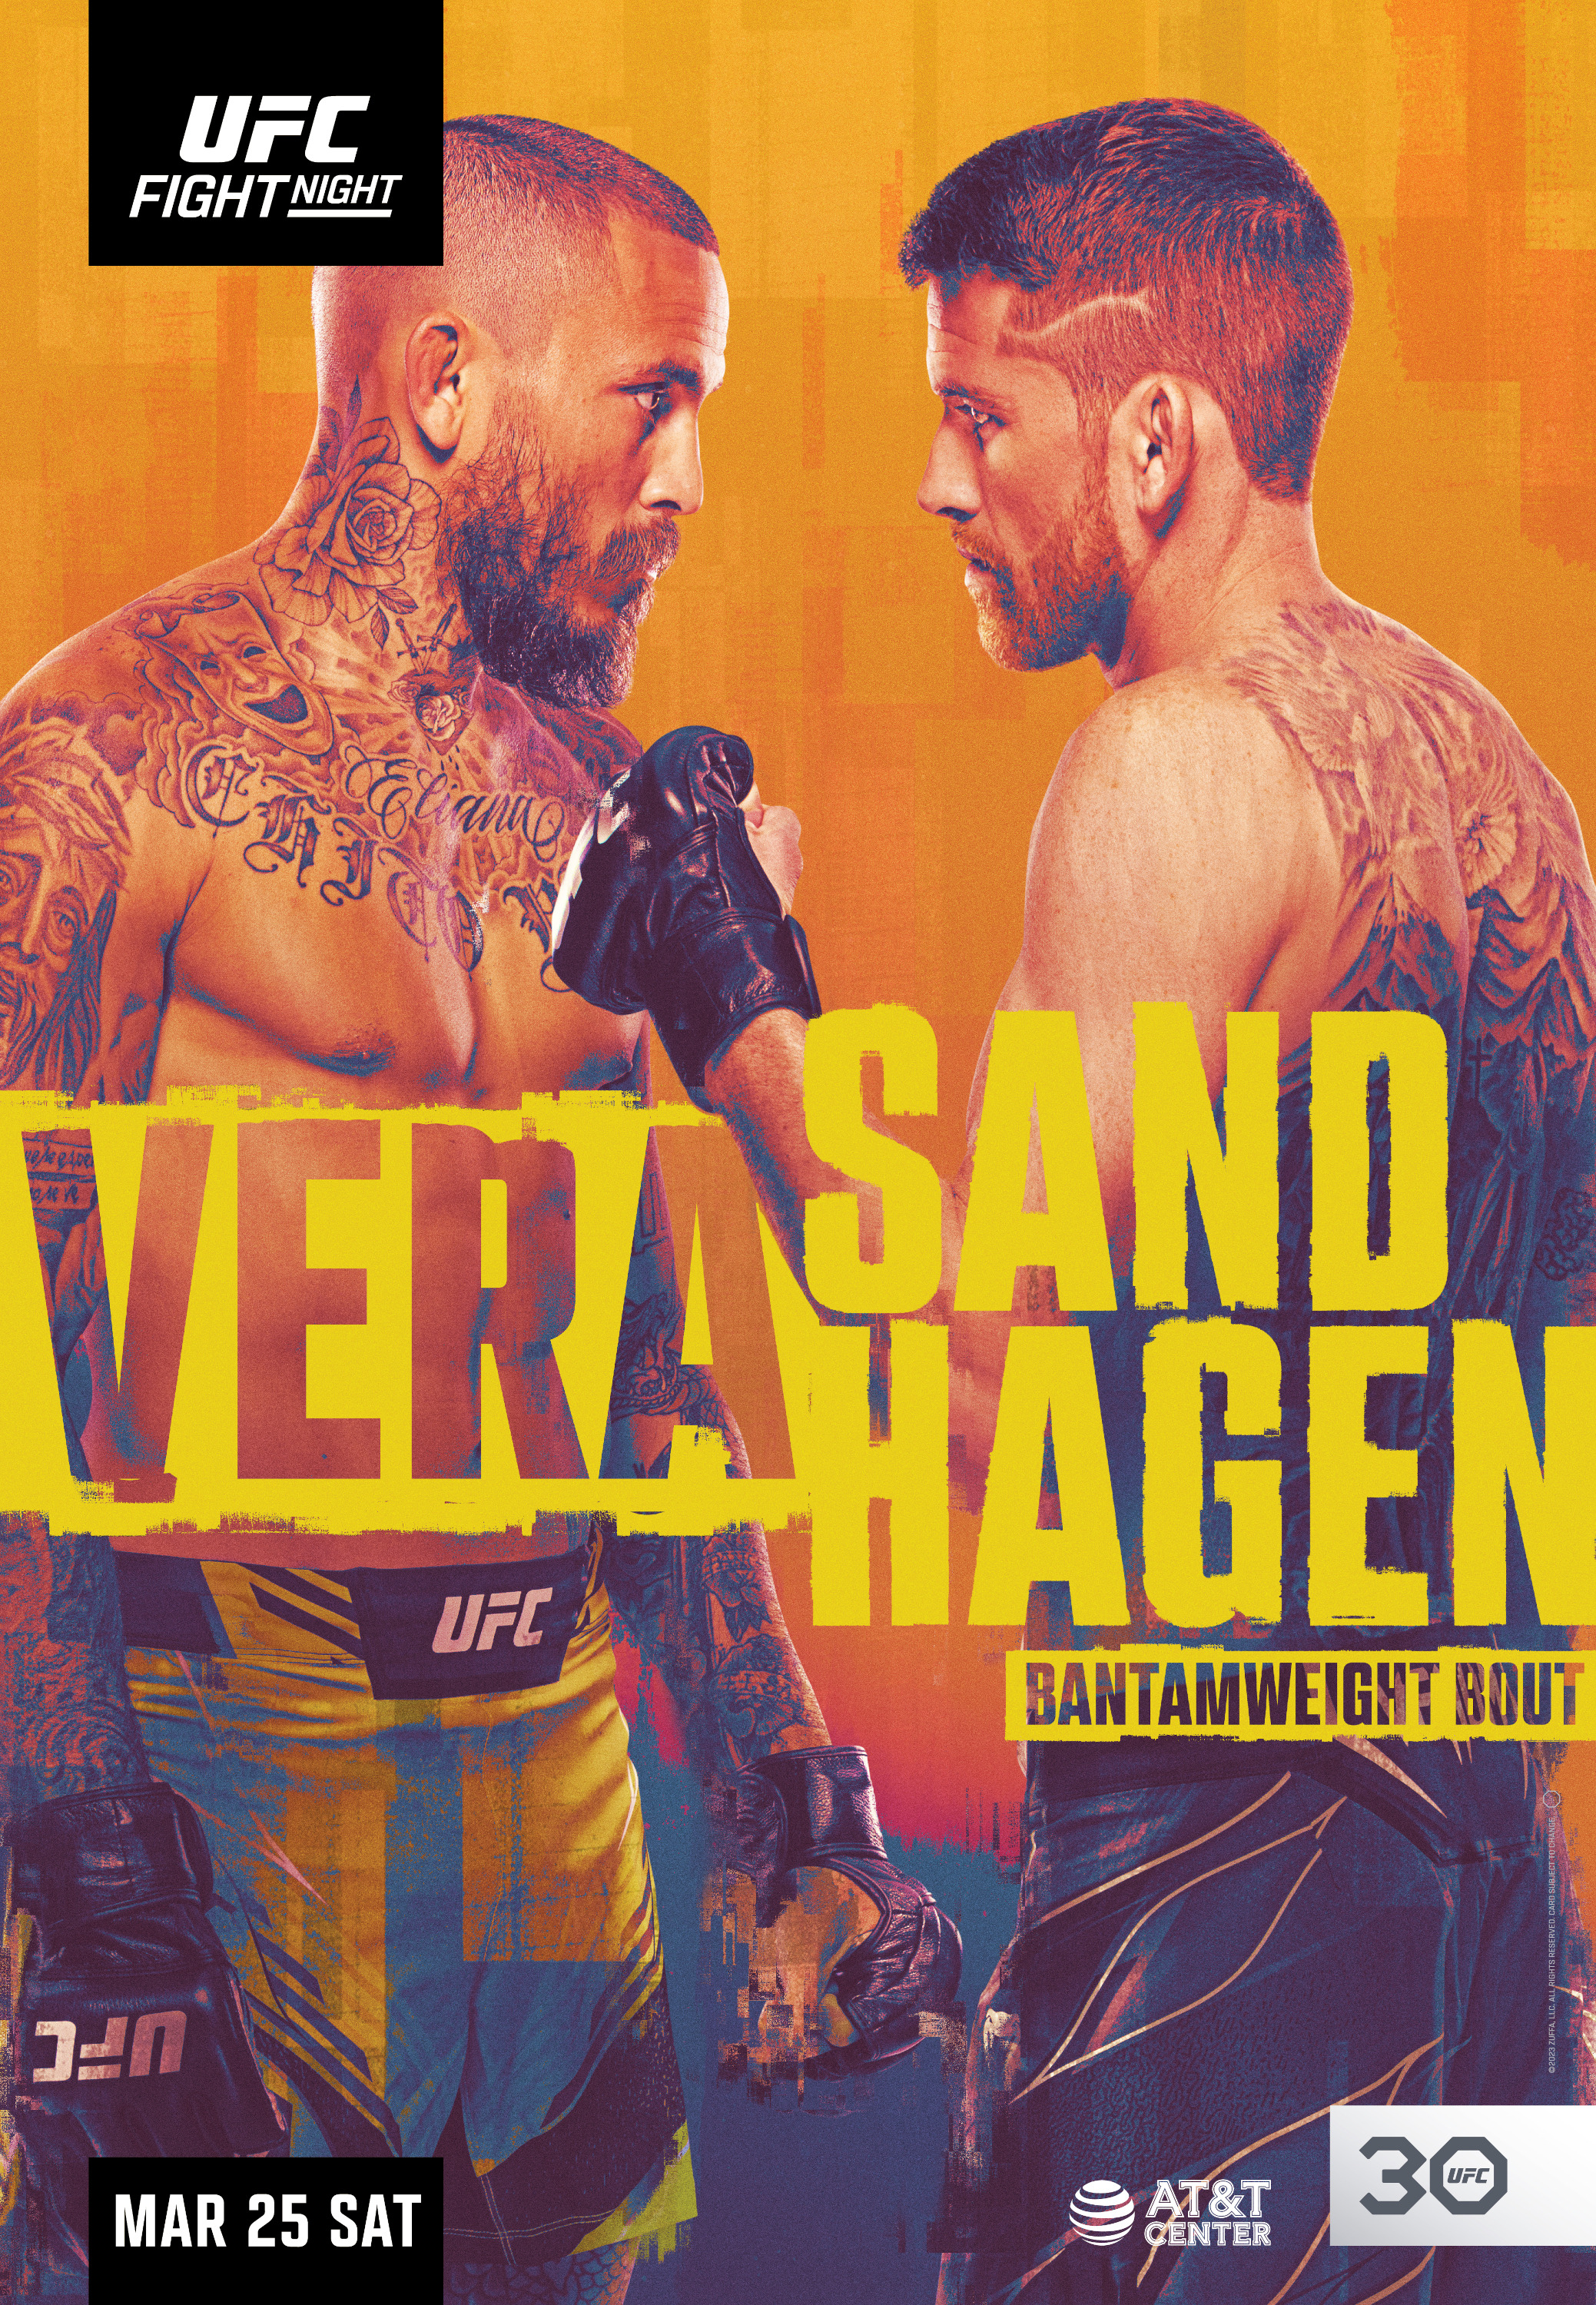 Mega Sized TV Poster Image for UFC Fight Night: Vera vs Sandhagen 